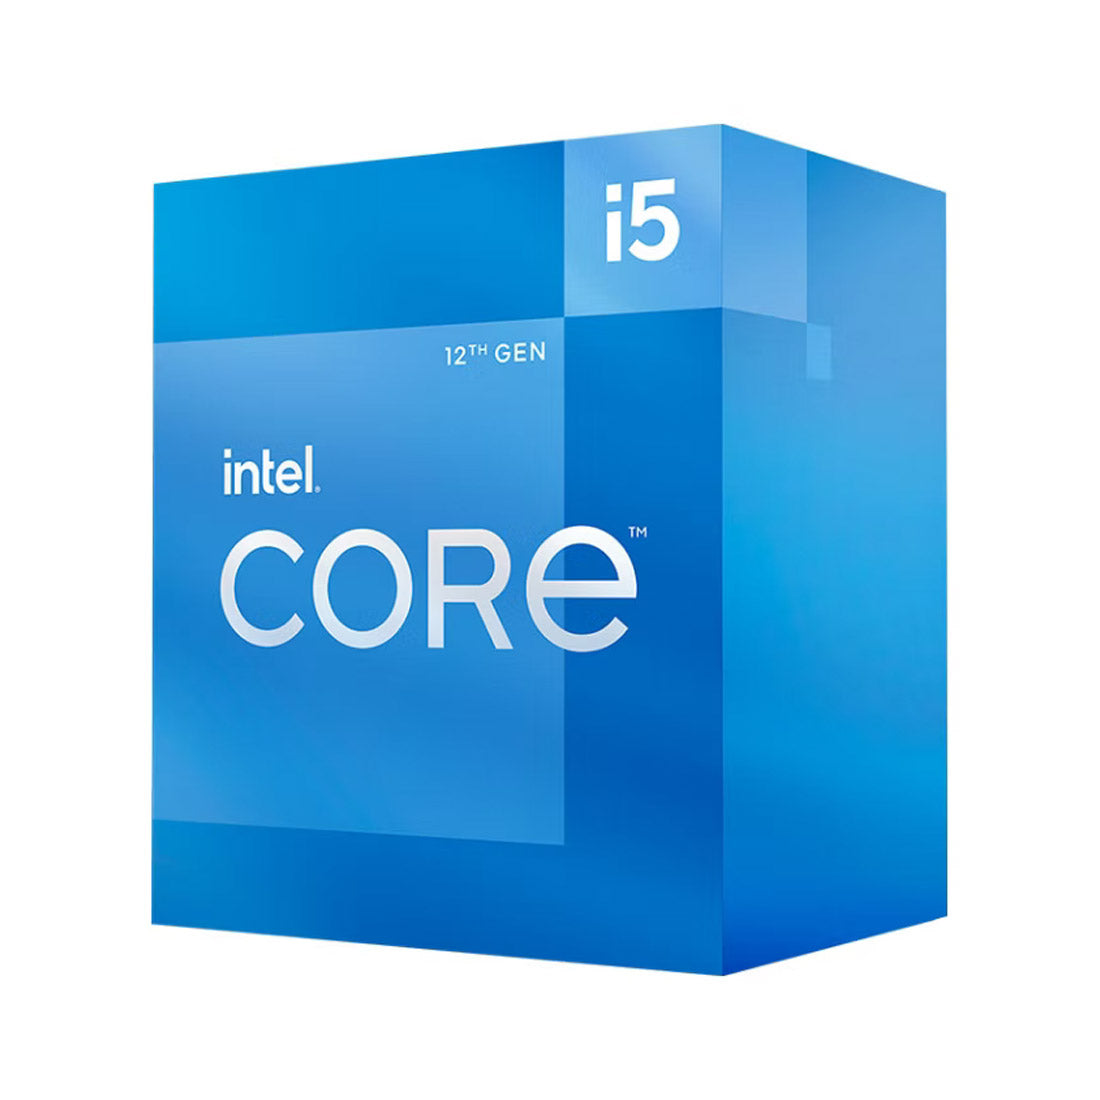 Intel Core 12th Gen i5-12400 LGA1700 डेस्कटॉप प्रोसेसर 6 कोर 4.4GHz तक 18MB कैशे